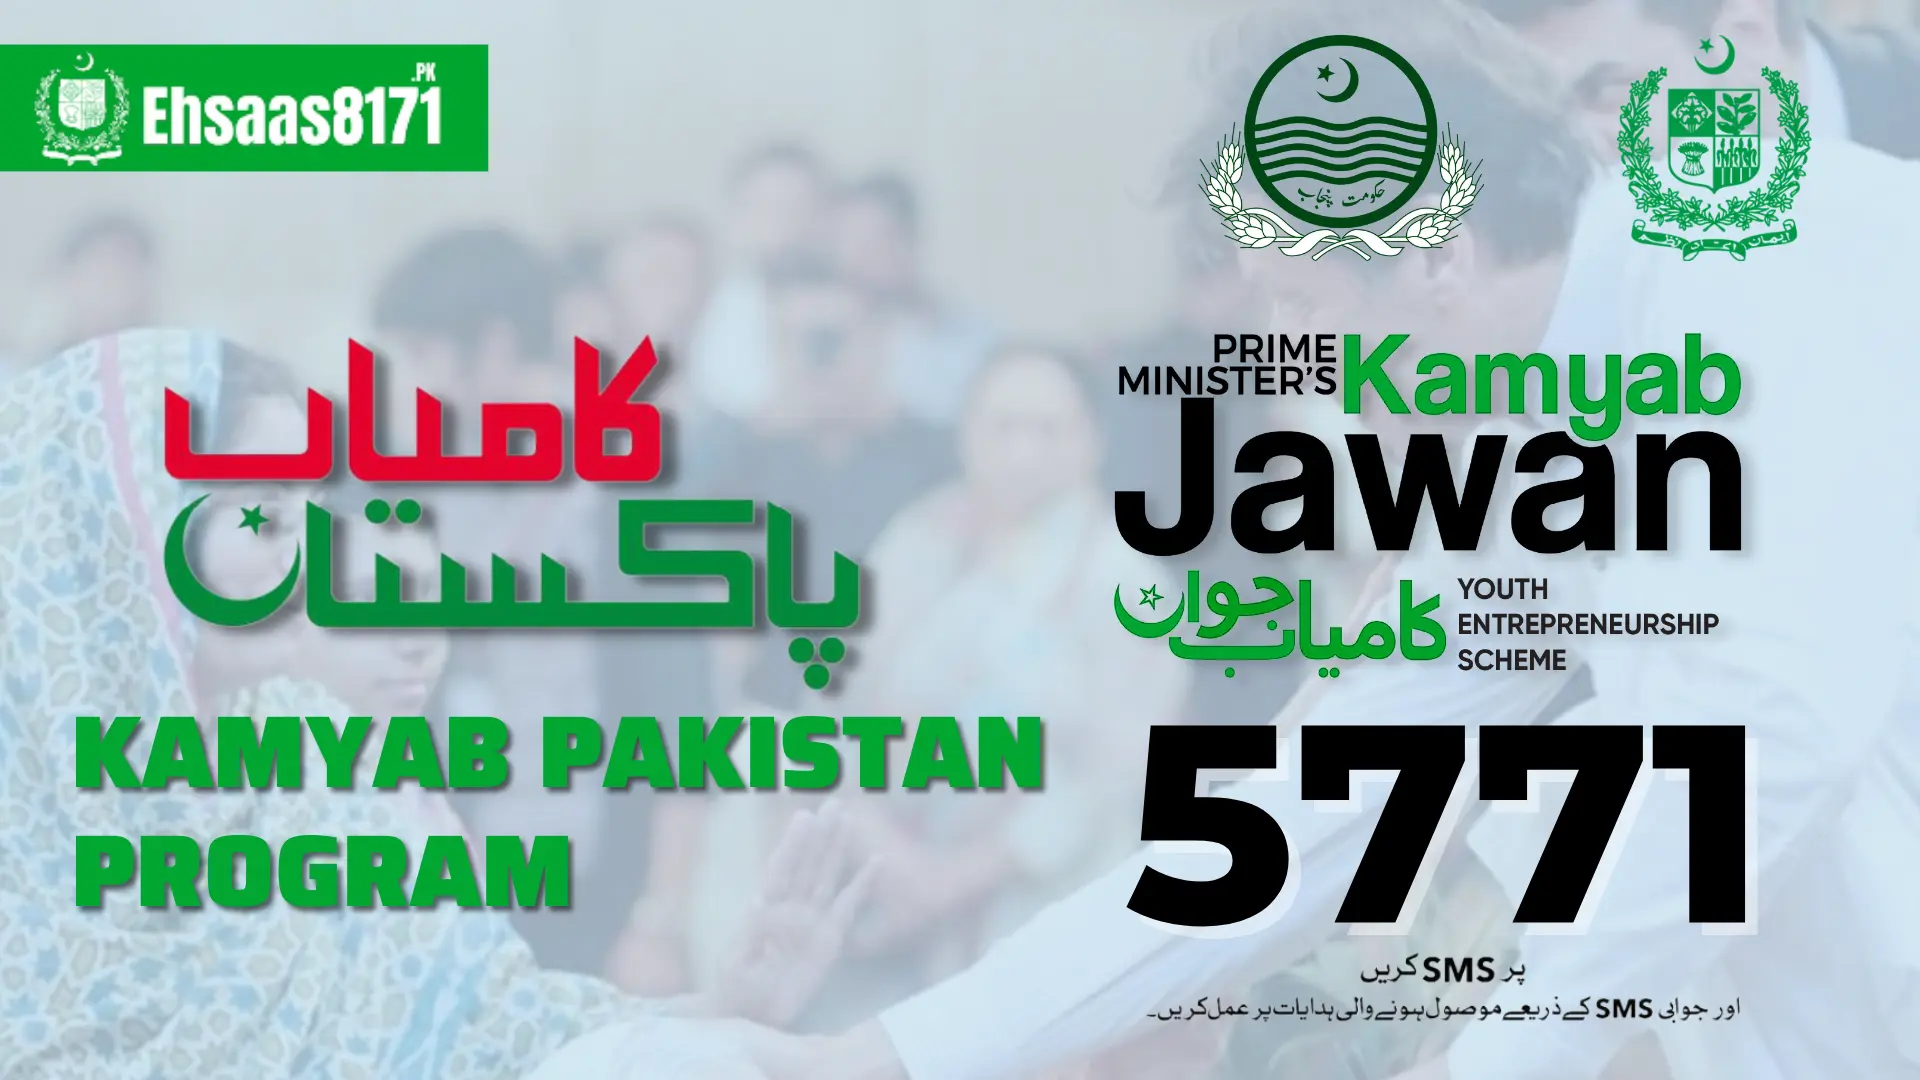 Kamyab Pakistan program 5771: